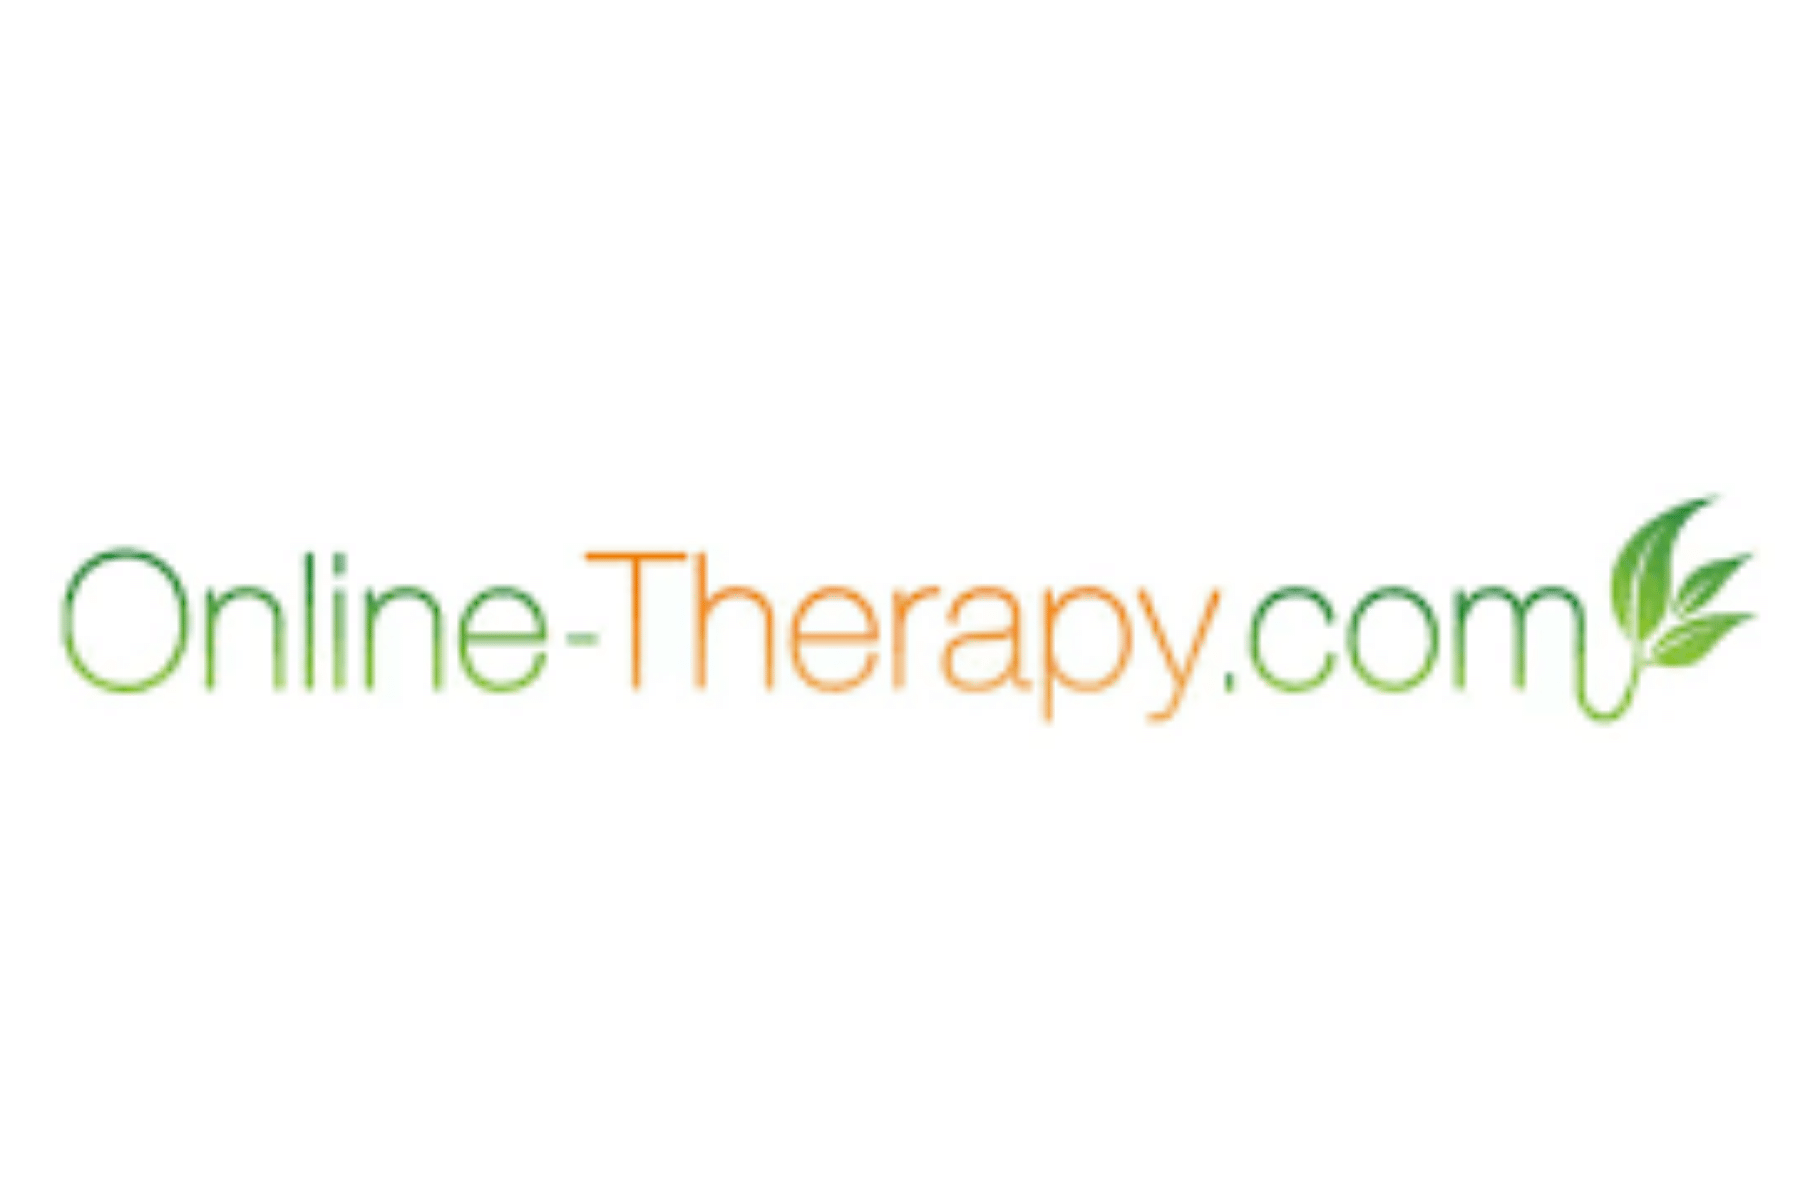 online therapy . com logo